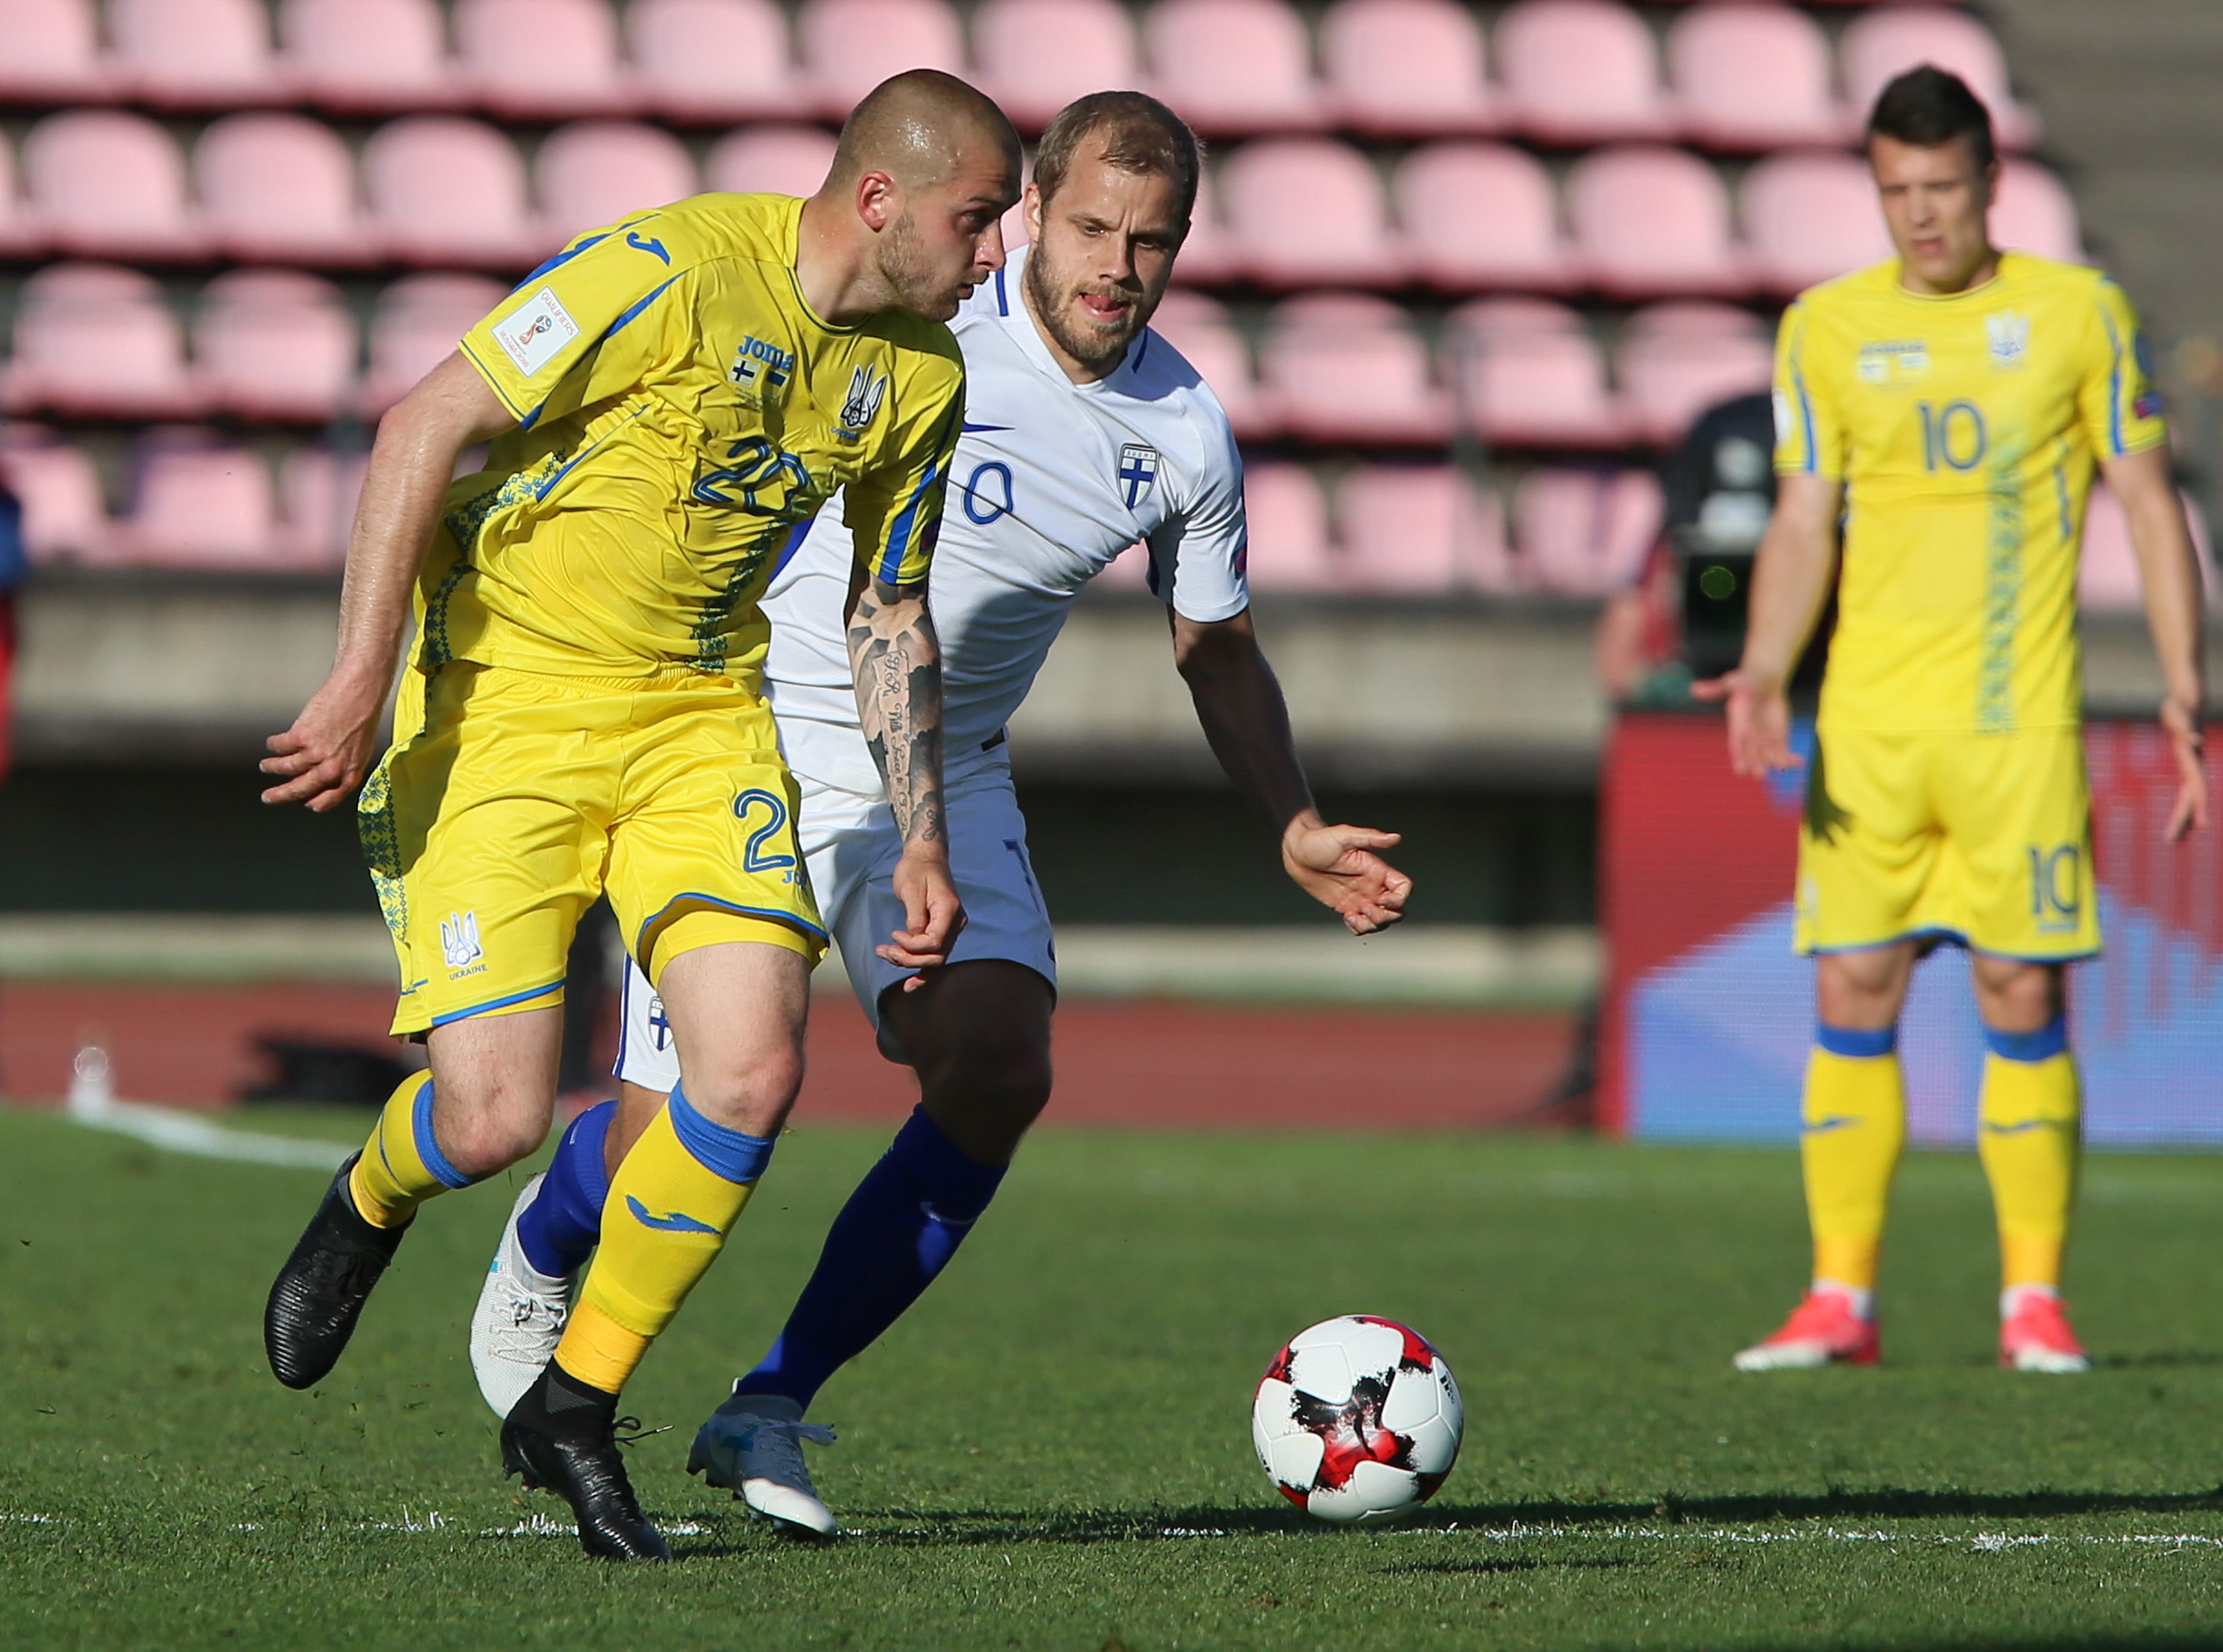 Training of the national team of Ukraine